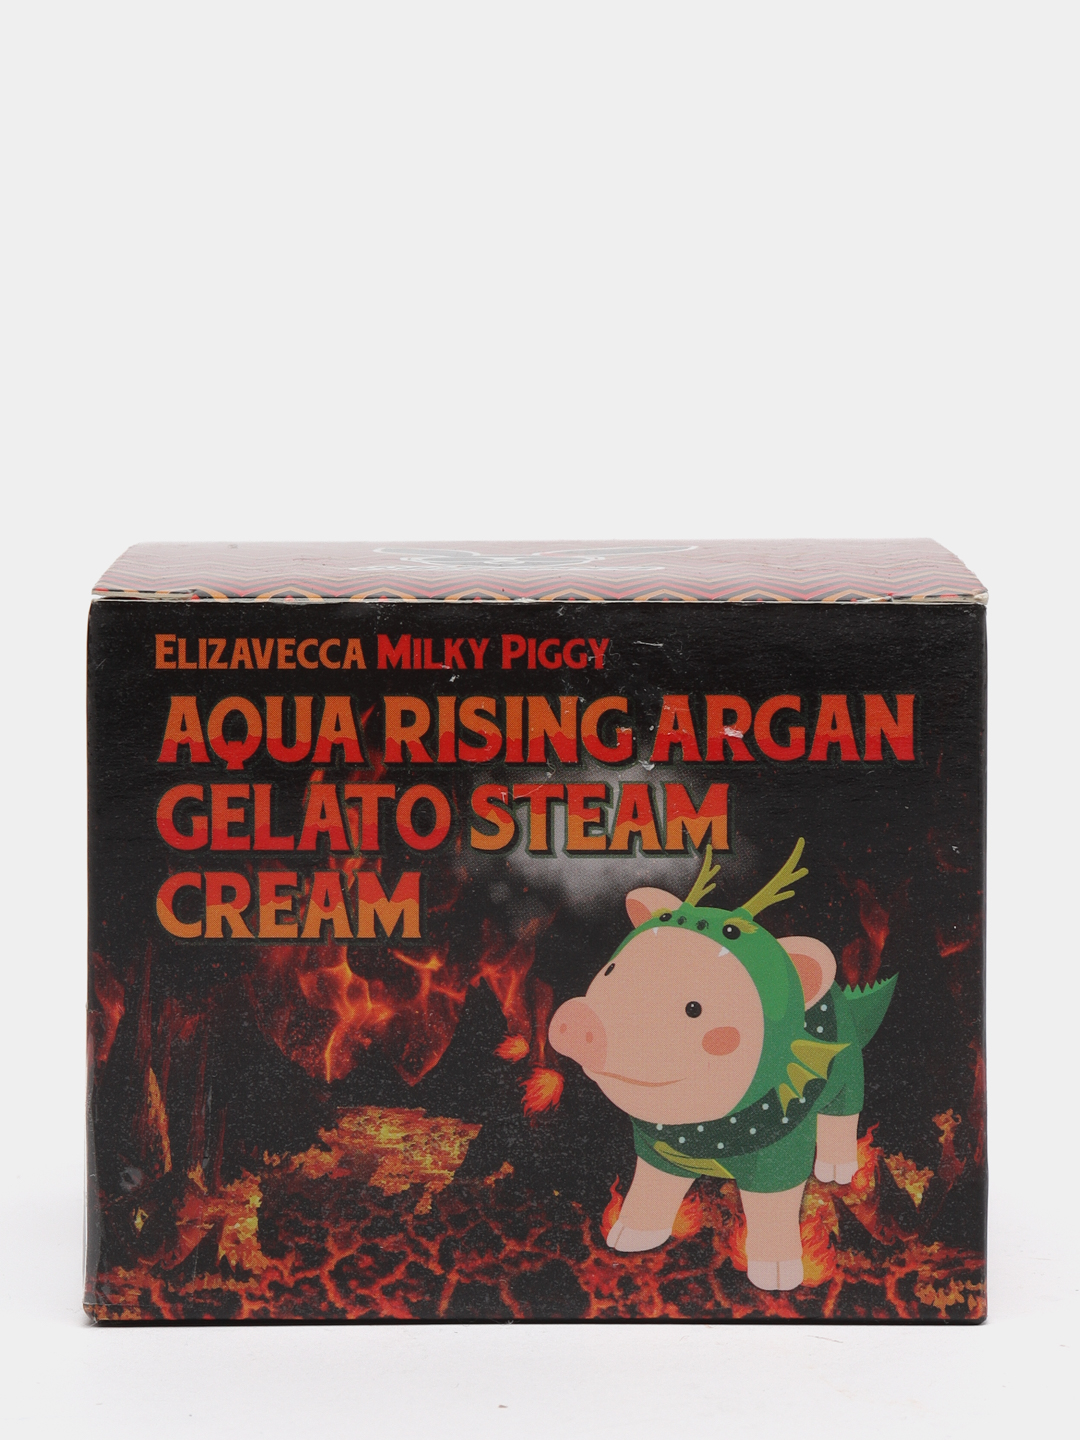 Aqua rising argan gelato steam фото 43